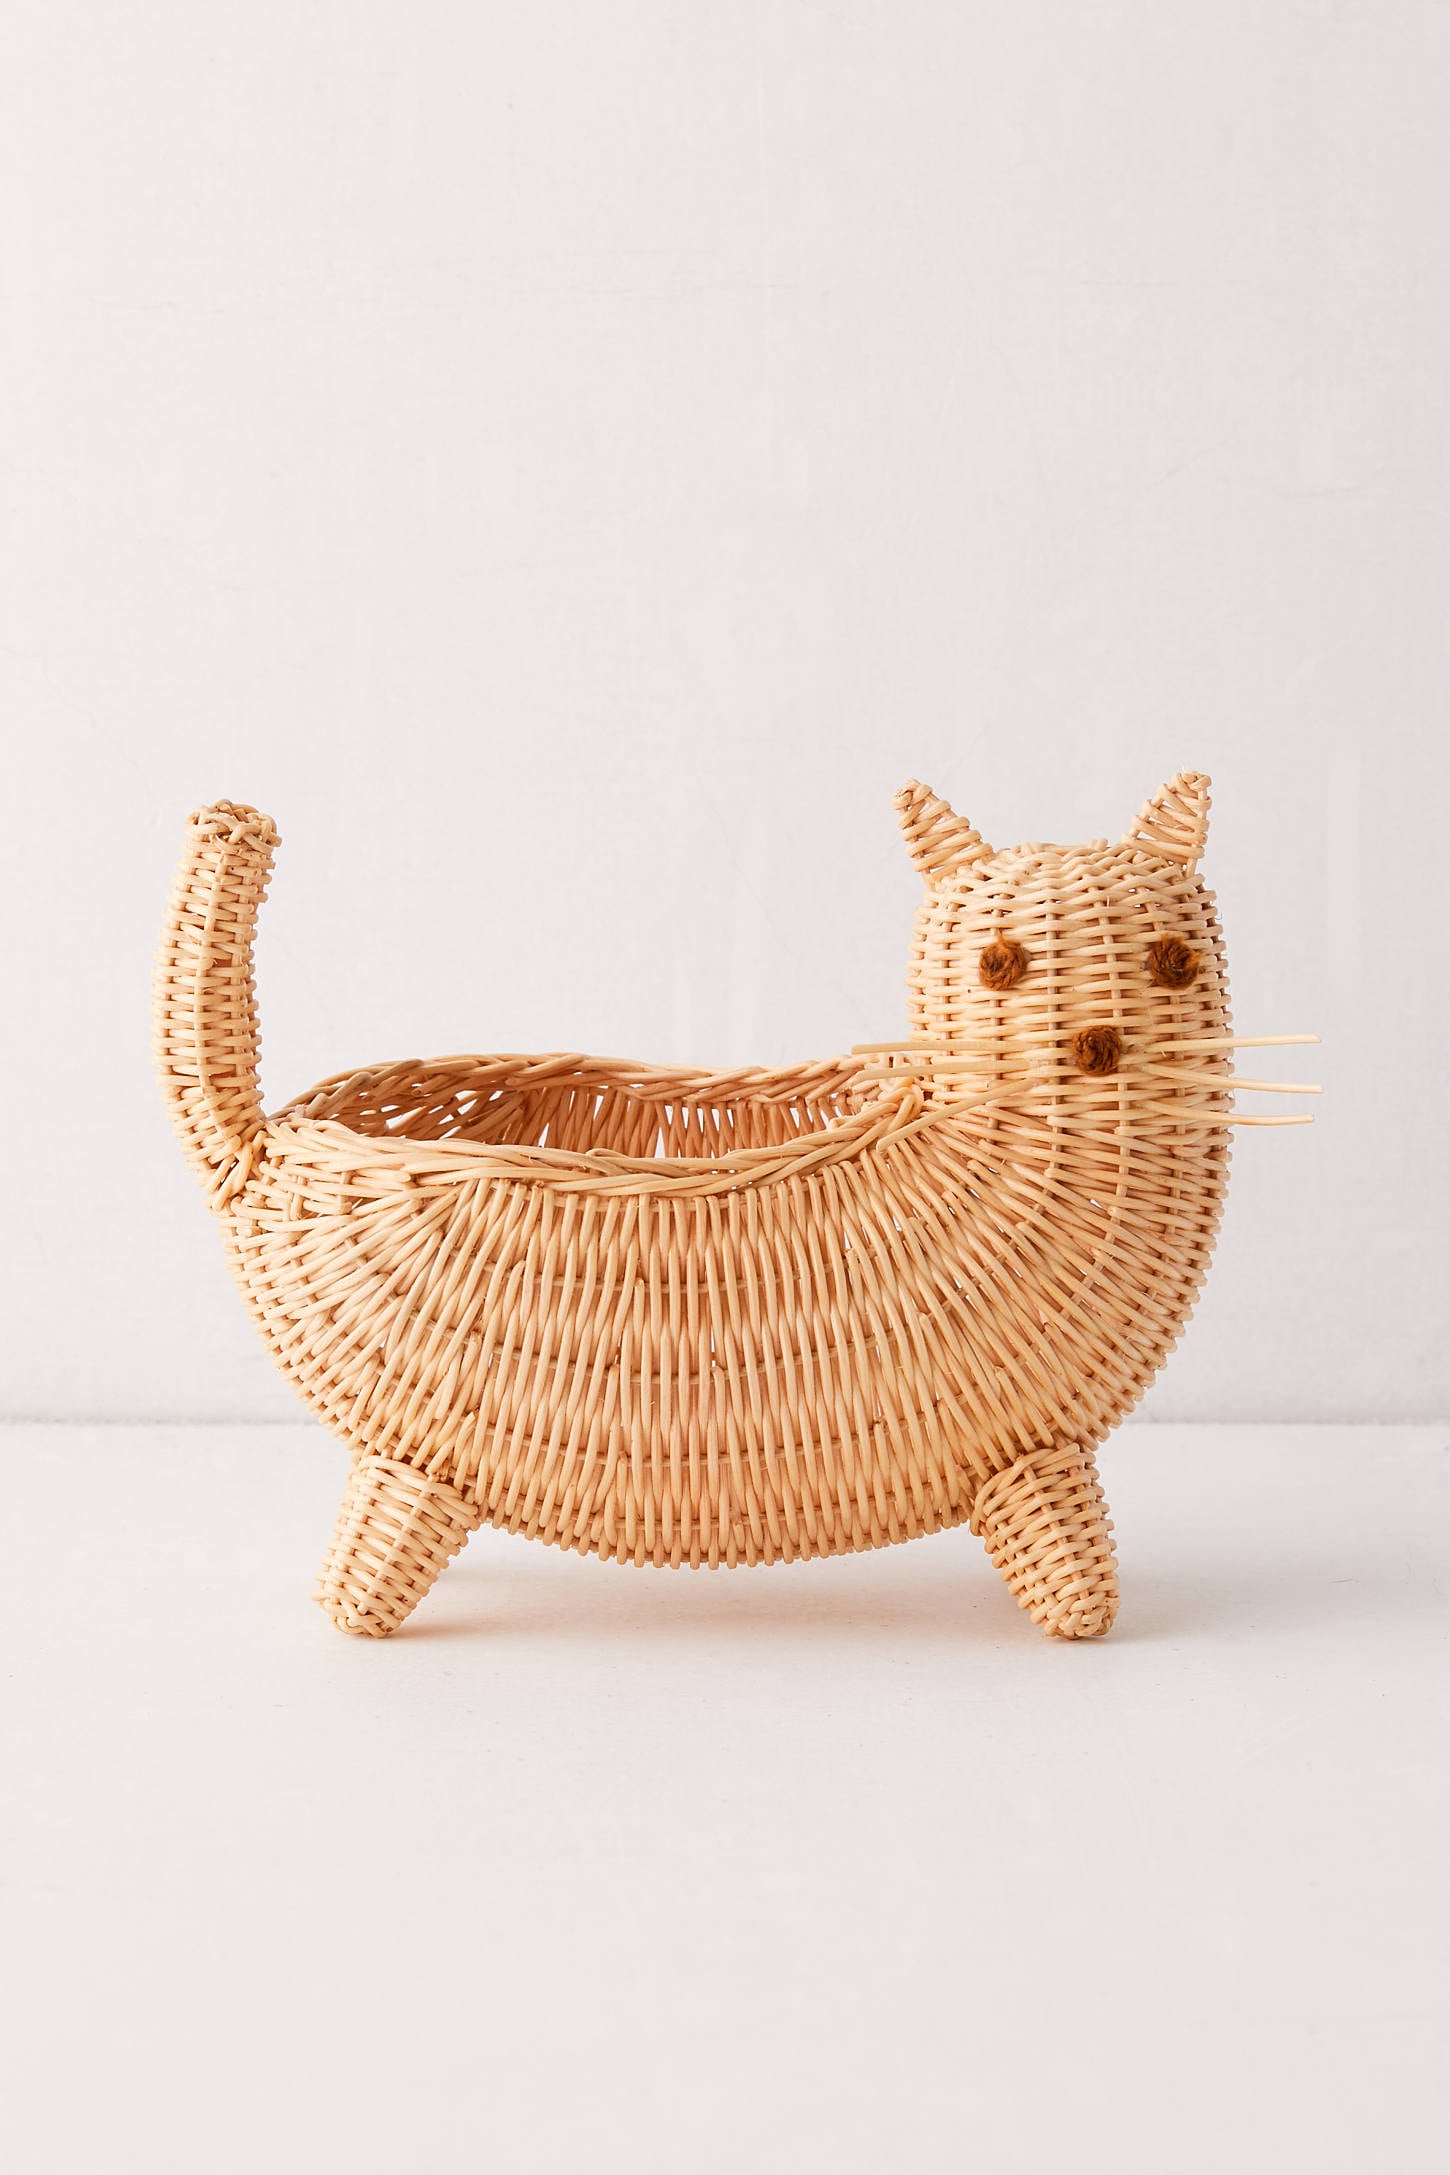 Kitty Catch-All Basket